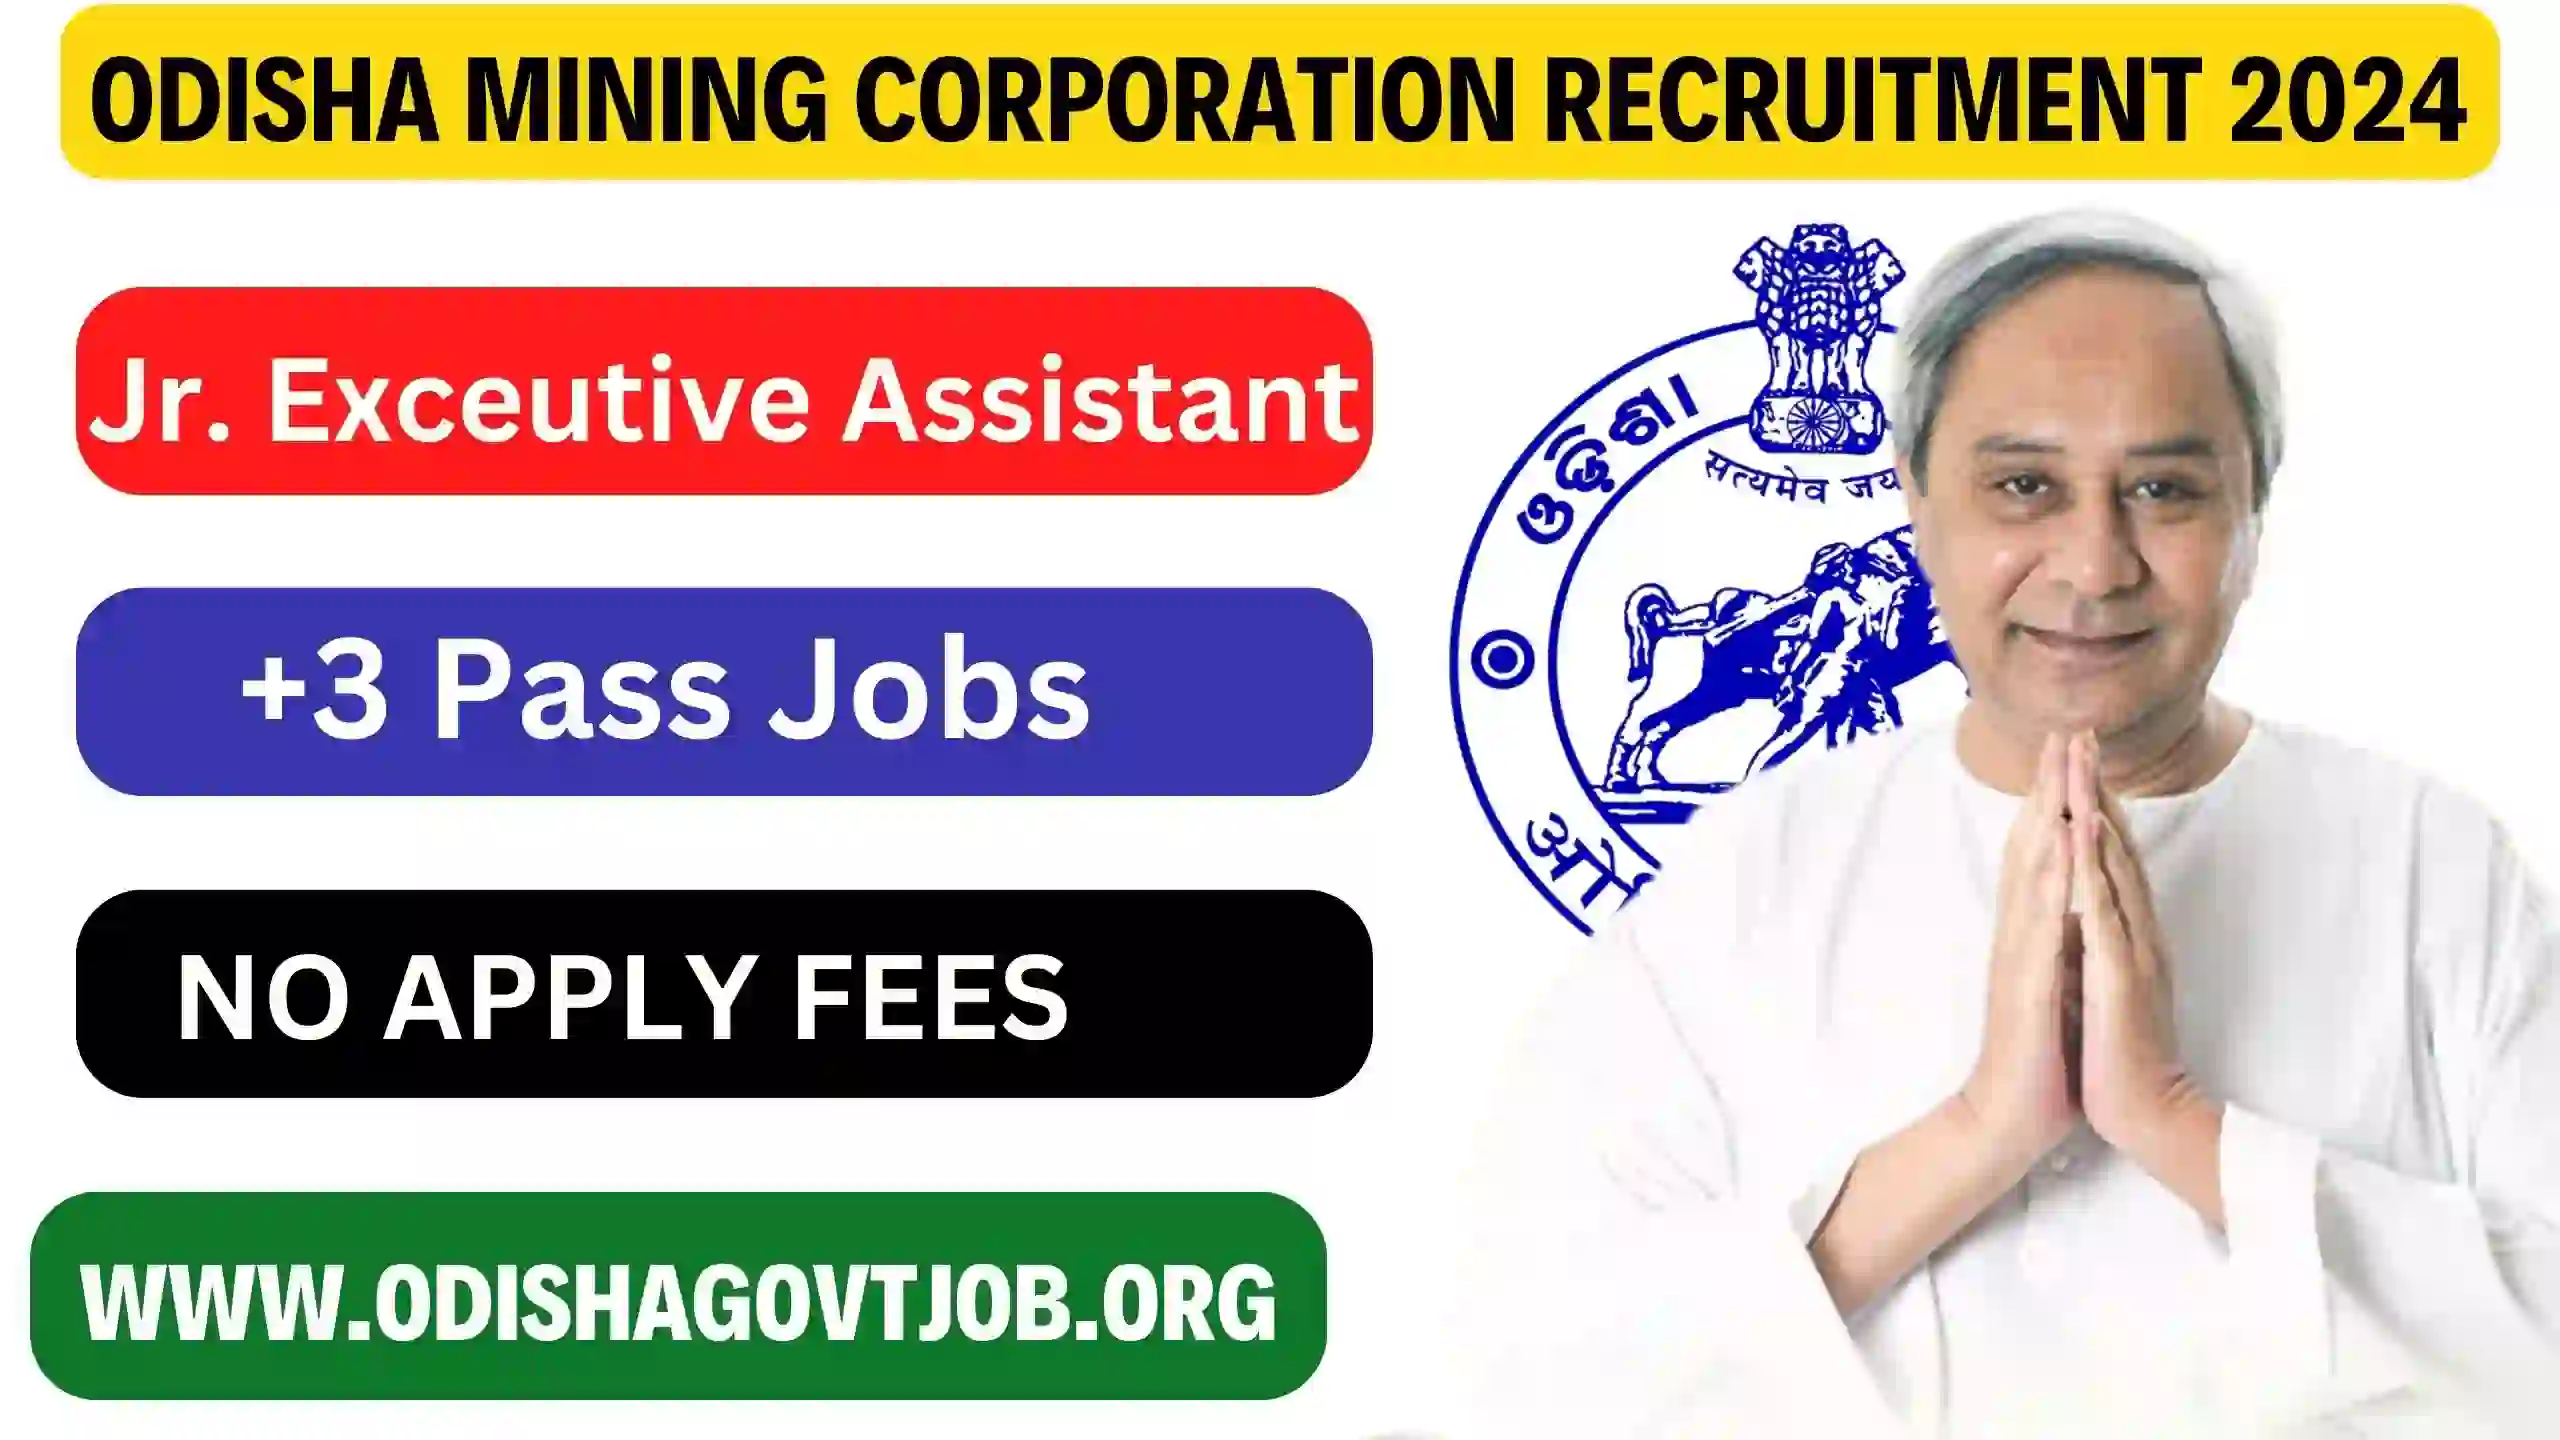 Odisha Mining Corporation Recruitment 2024